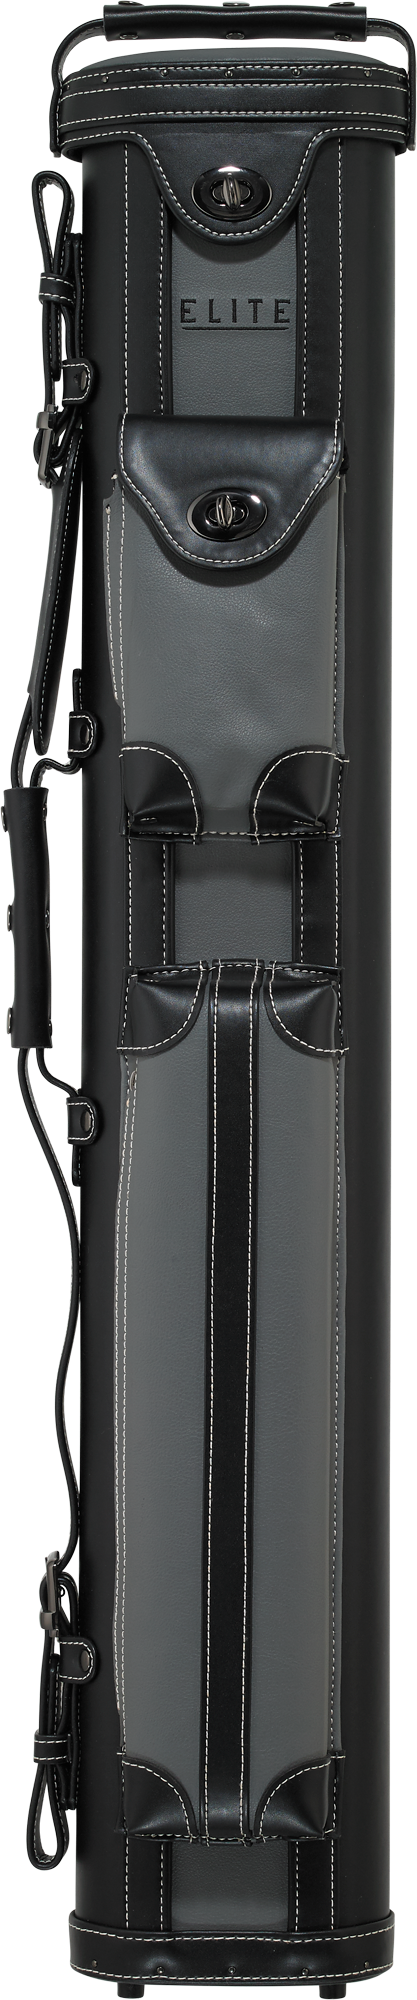 Elite Hard Cue Case ECV24 Leather GREY - 10% off at Budget Billiards!